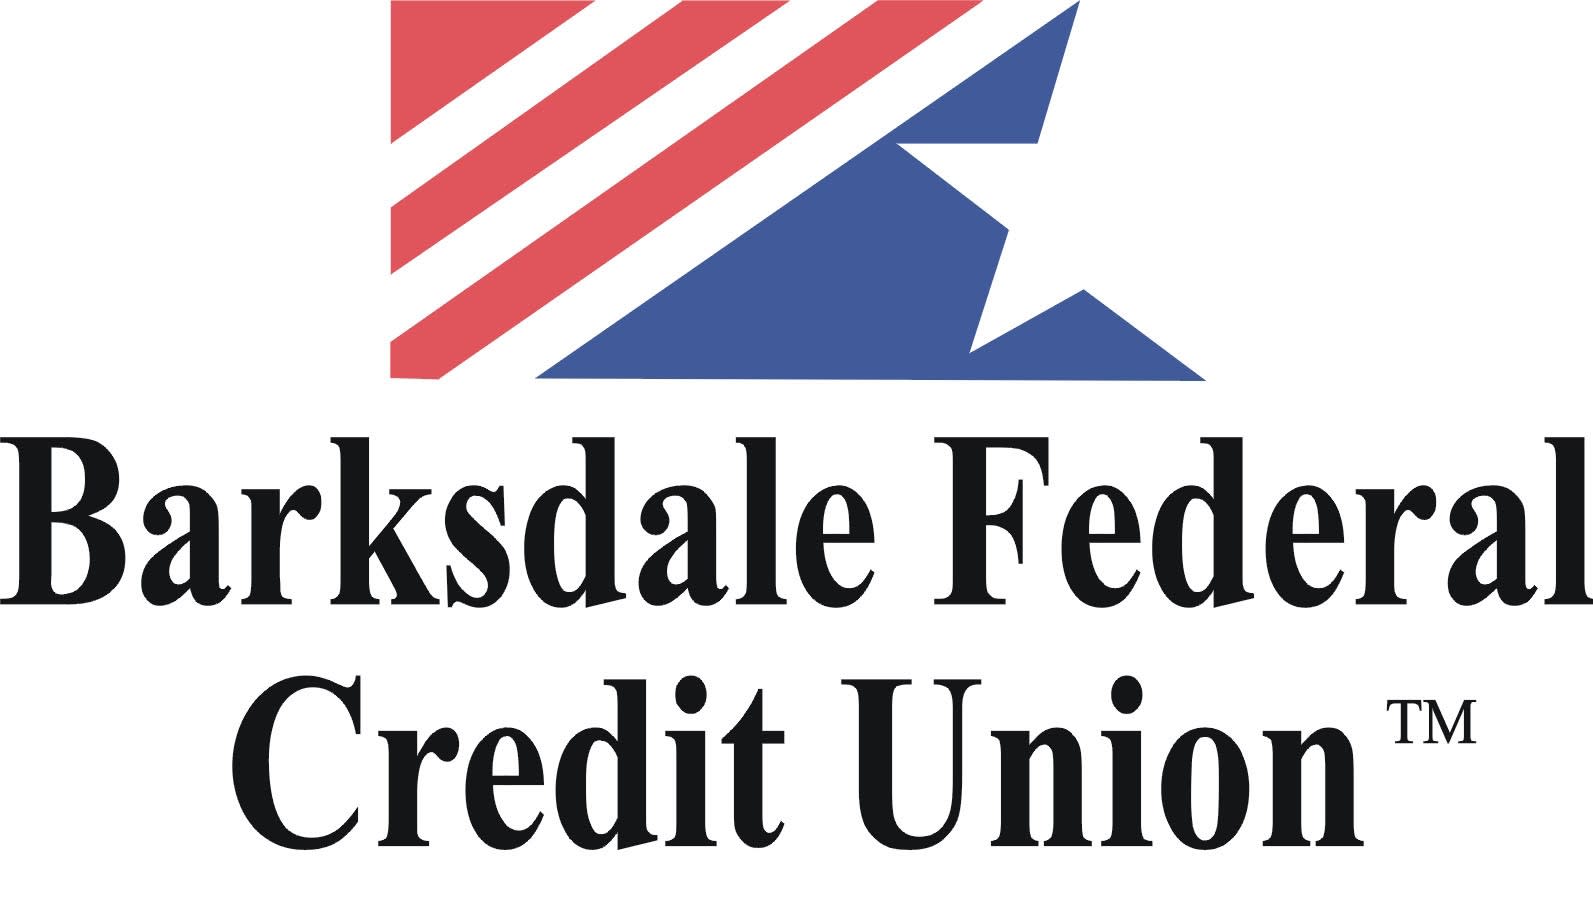 Barksdale Federal Credit Union-Linton Road Center